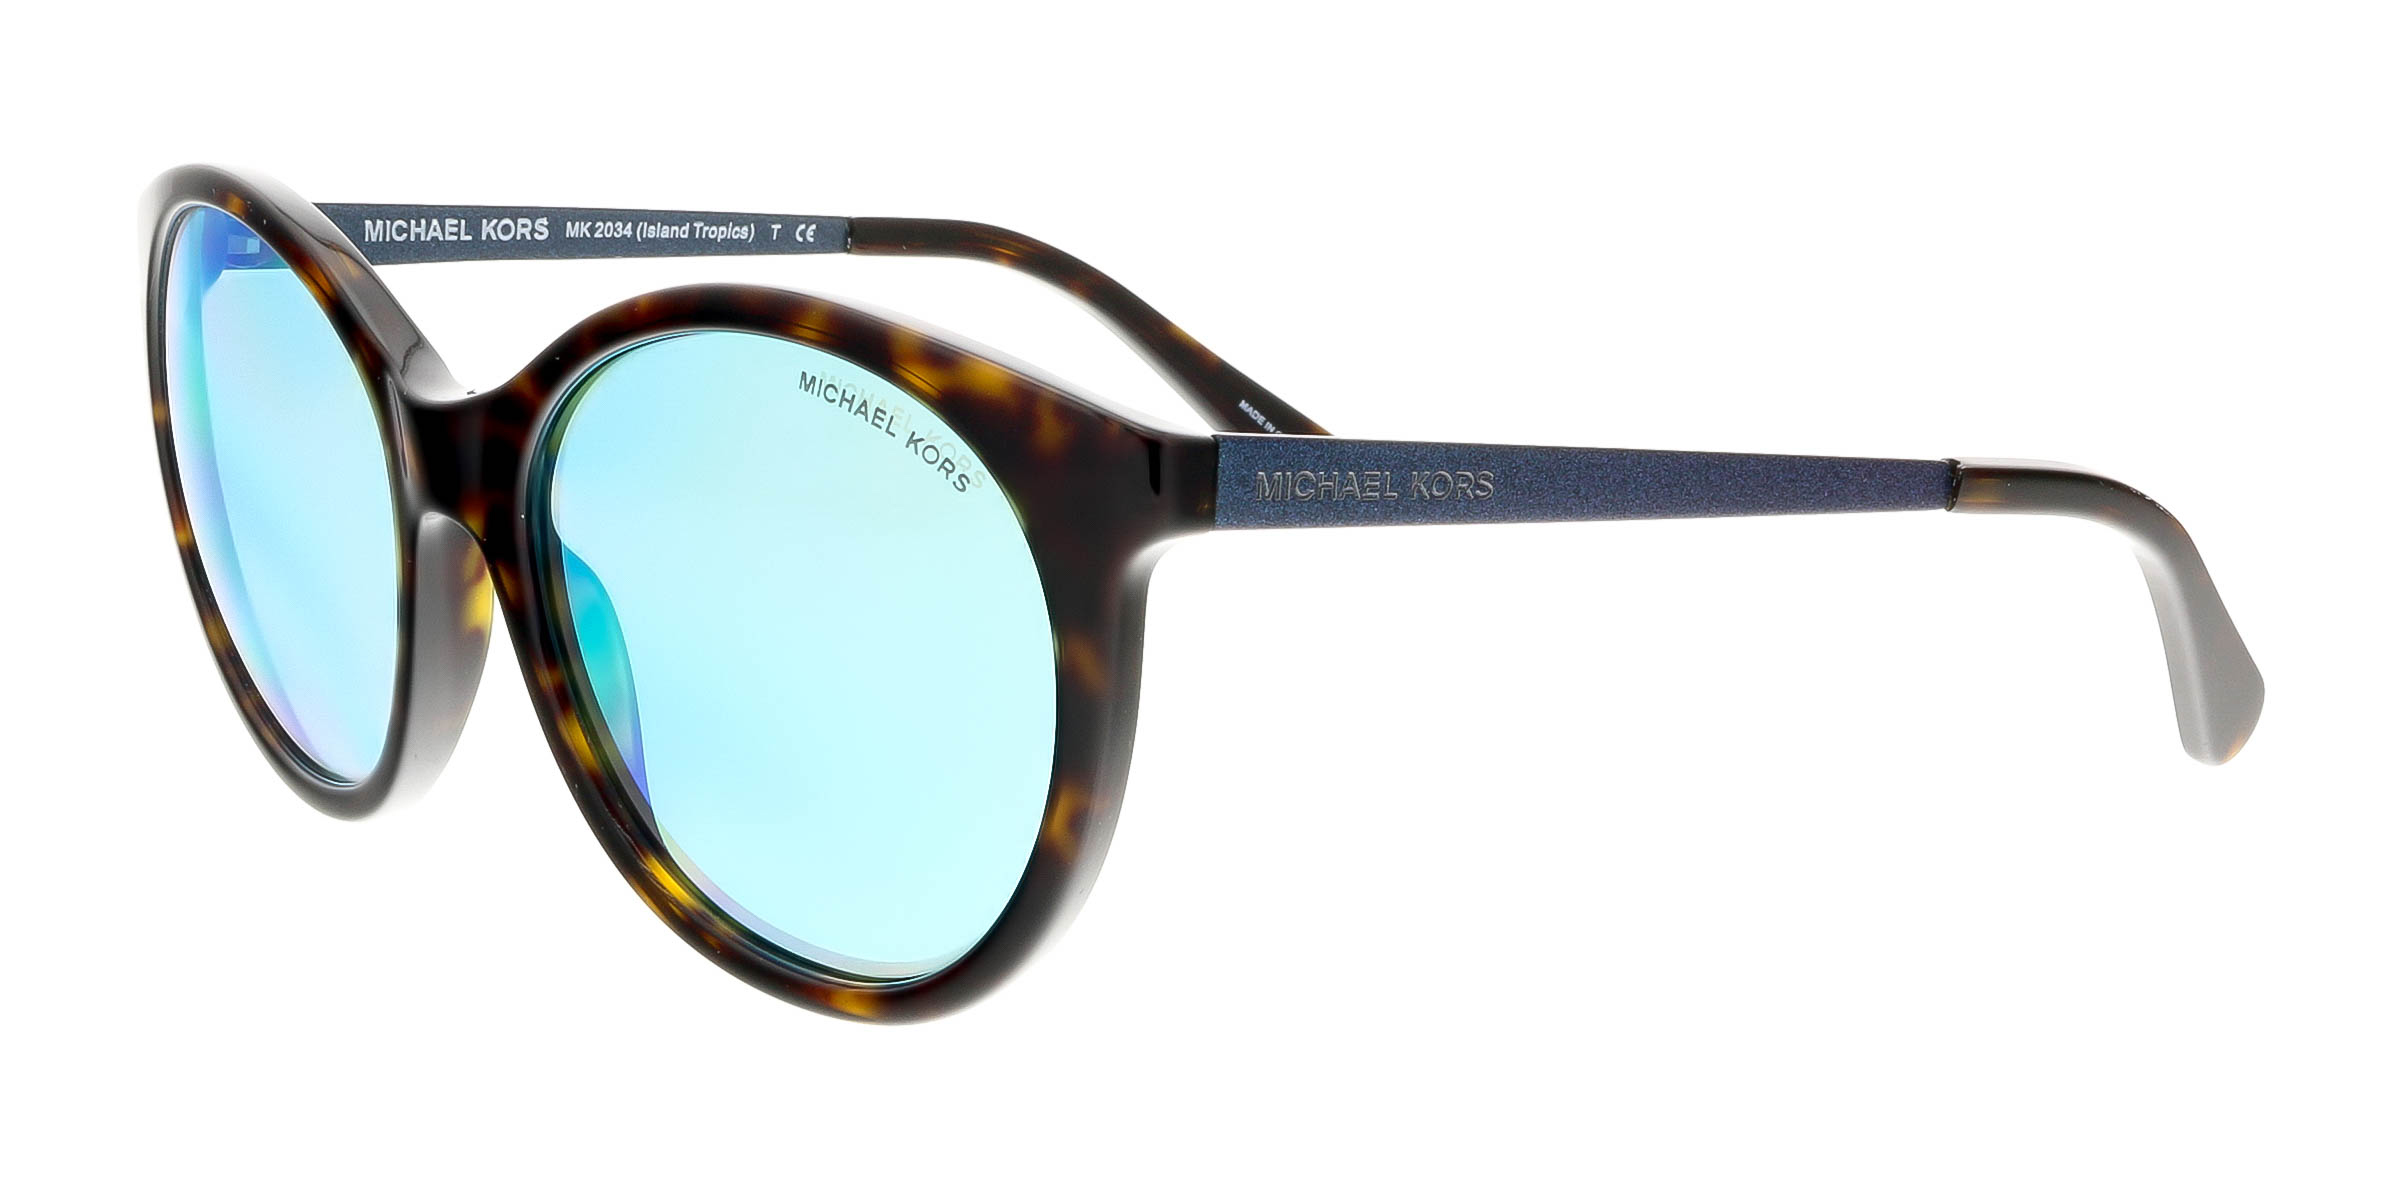 Michael Kors MK2034 320225 ISLAND TROPICS Tortoise  Round Sunglasses - image 1 of 5